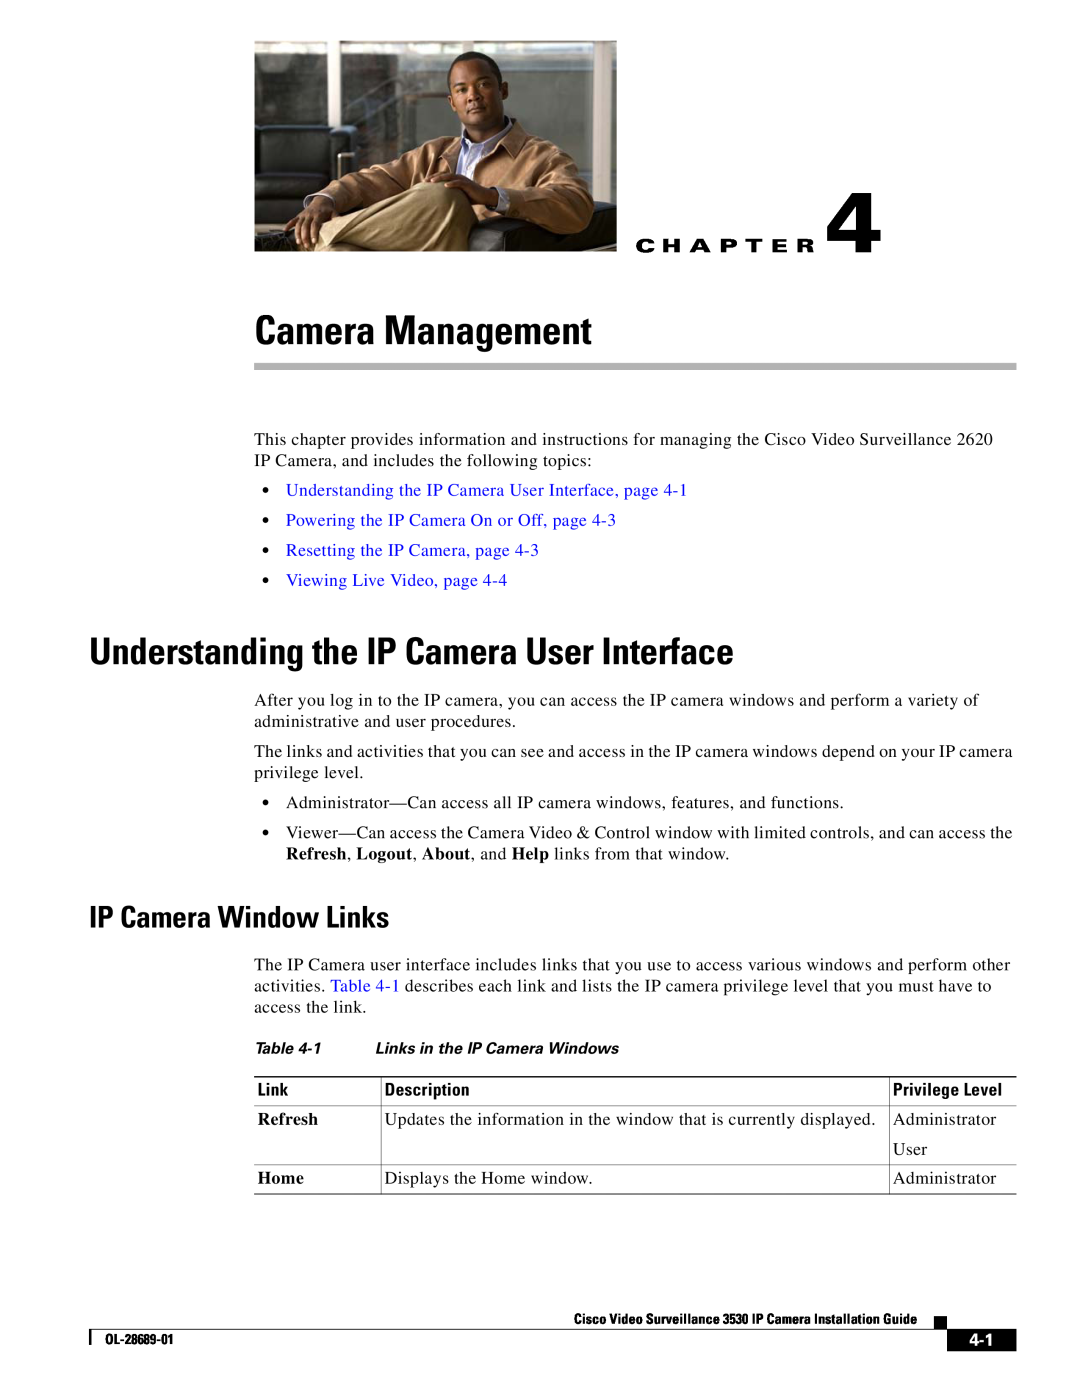 Cisco Systems 3530 Camera Management, Understanding the IP Camera User Interface, IP Camera Window Links, Refresh, Home 